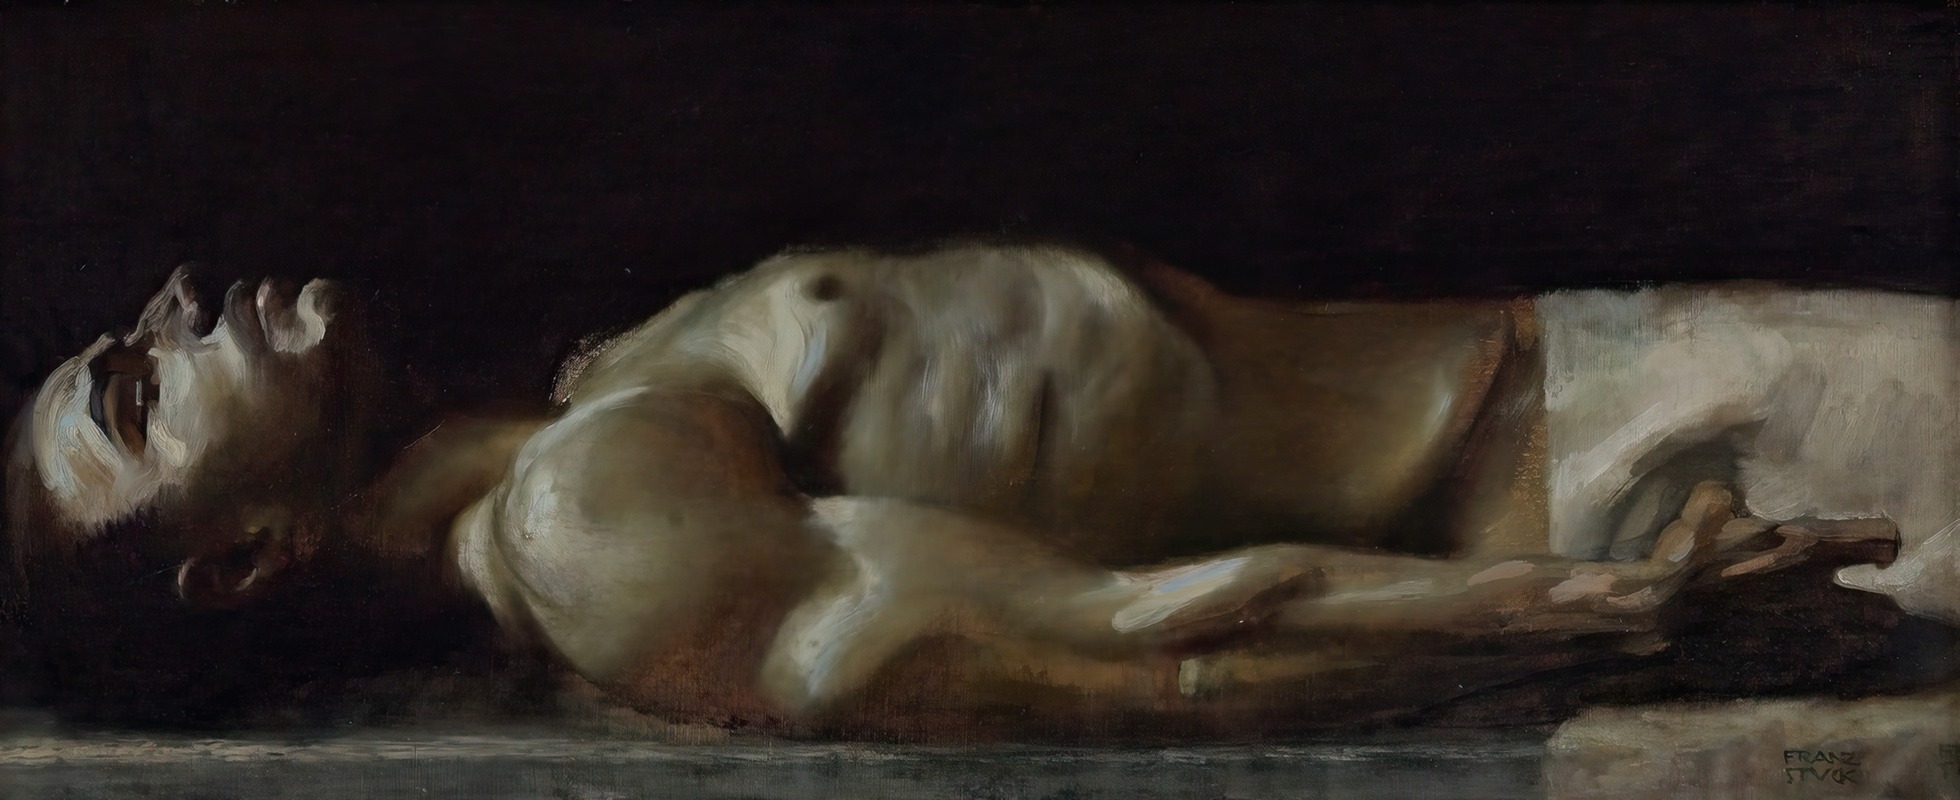 Franz von Stuck - Corpse of Christ, oil study for the ‘Pietà’